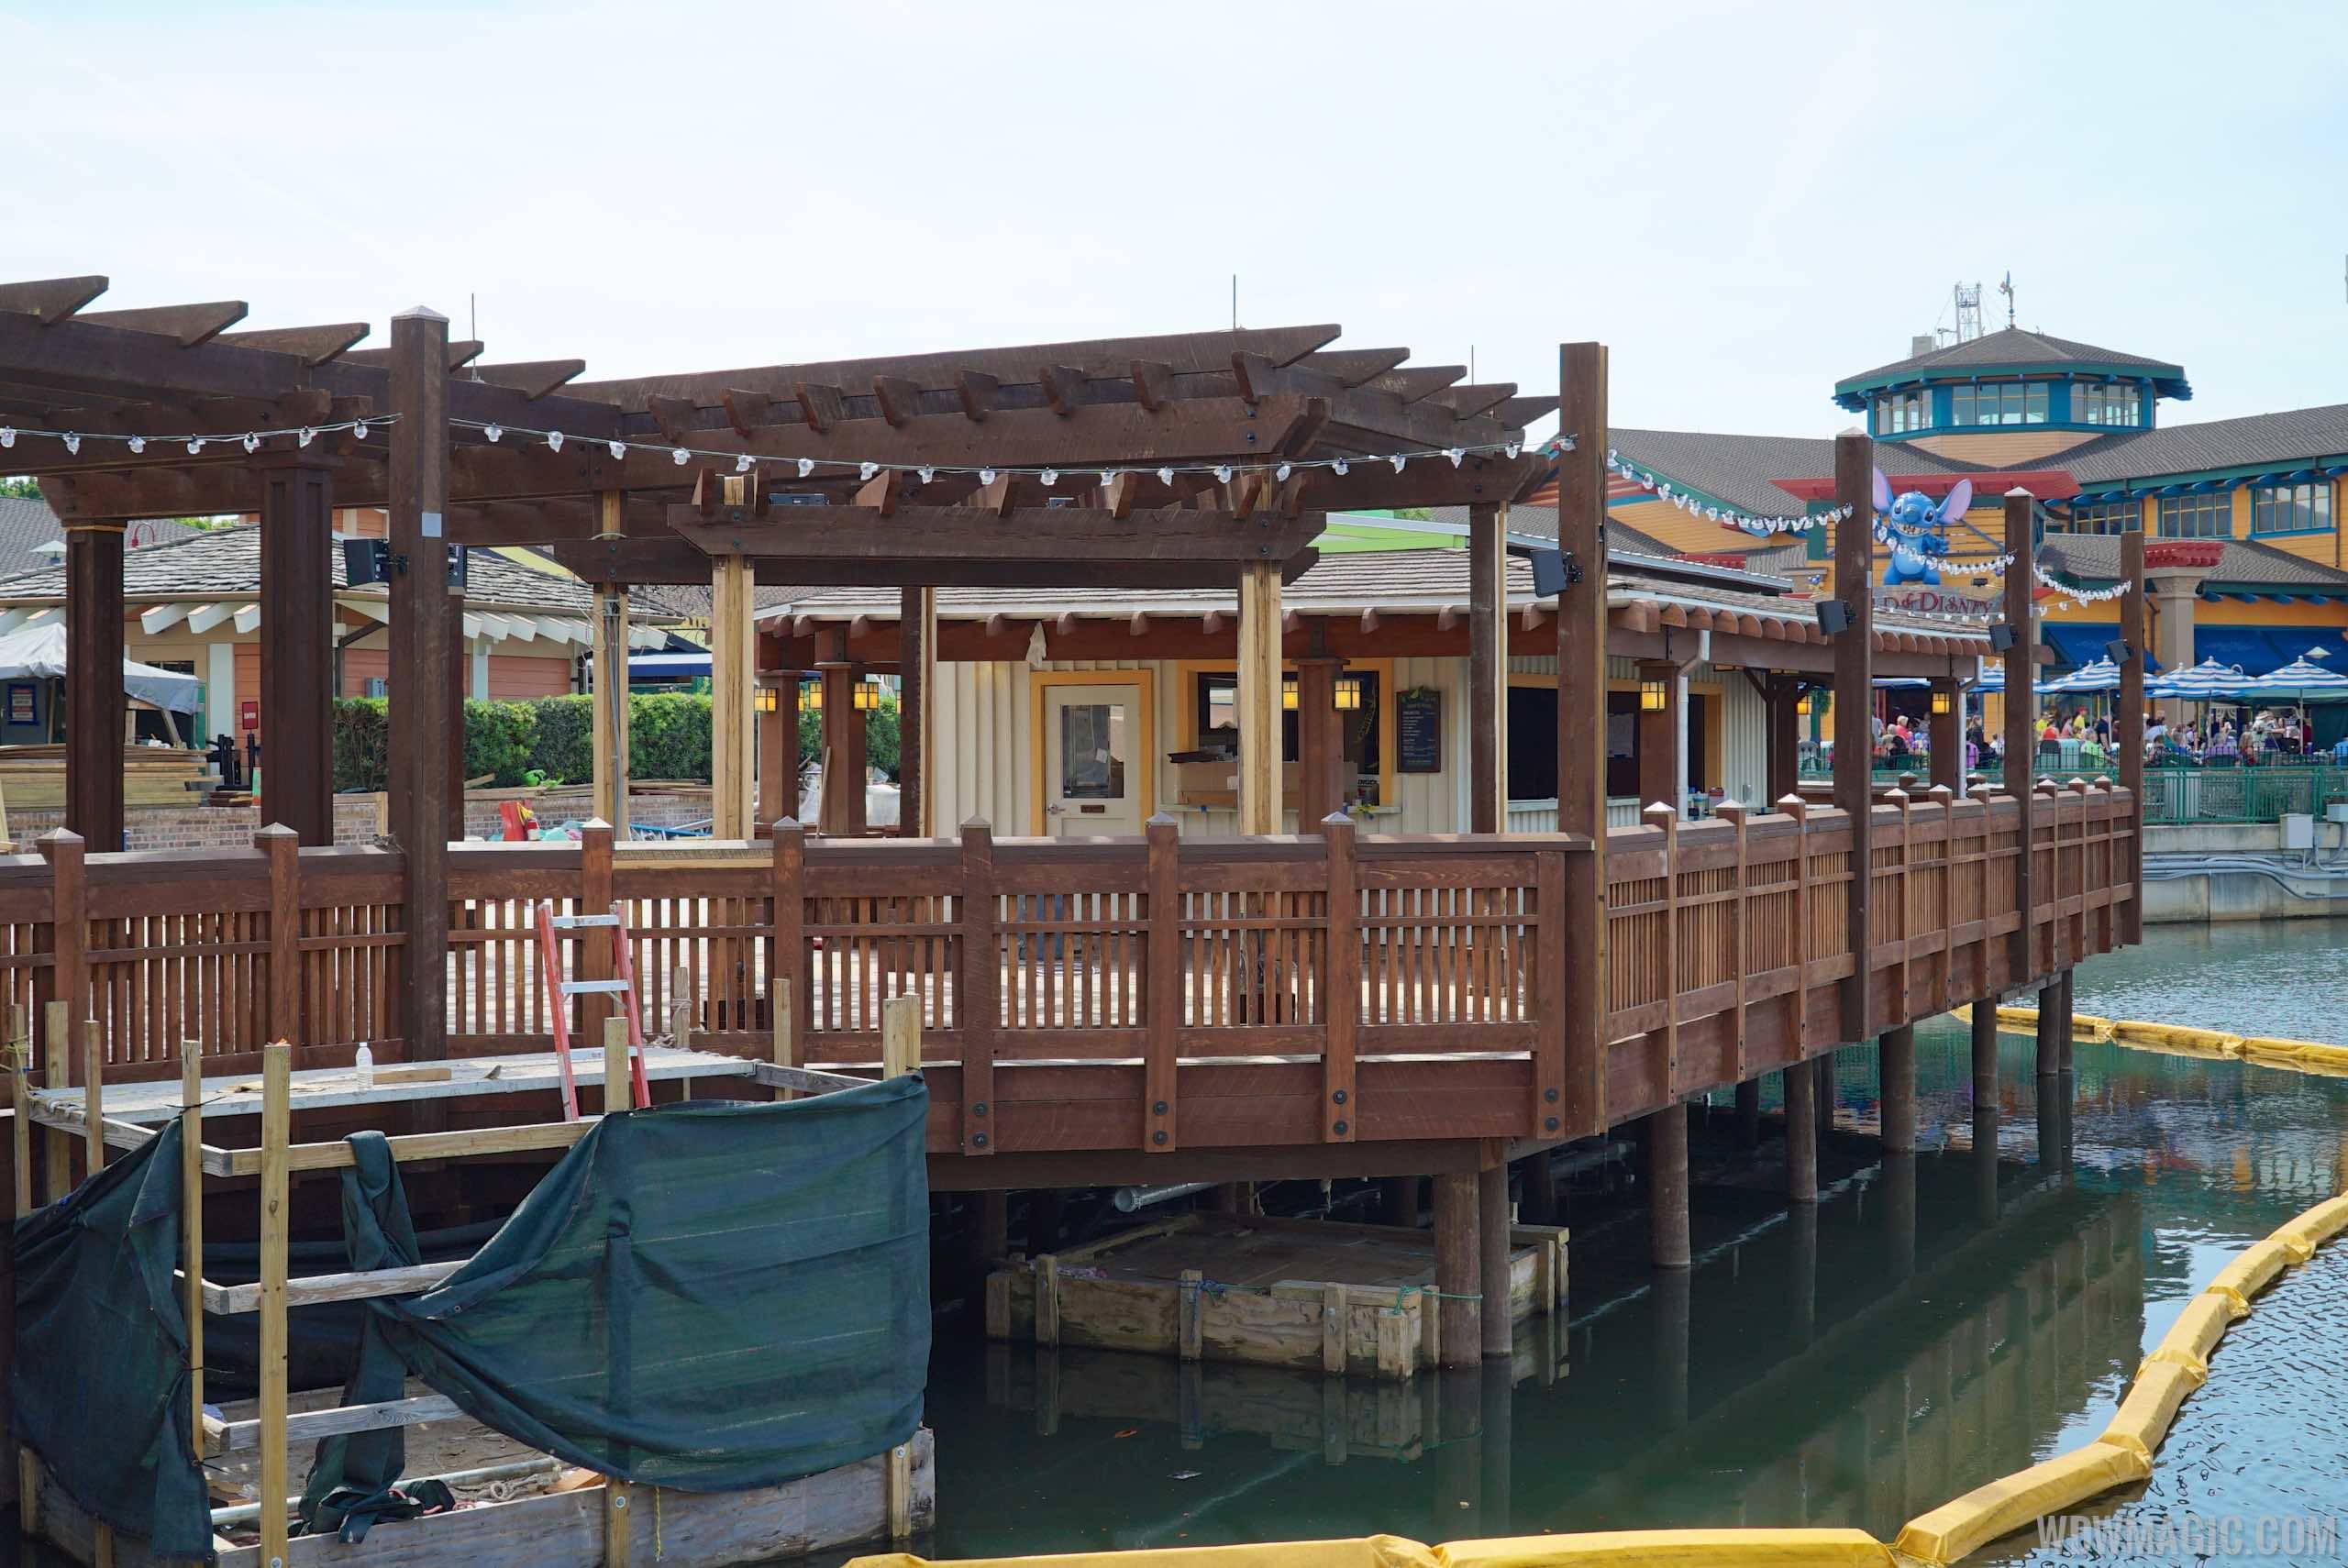 New Disney Springs Marketplace Margarita bar construction